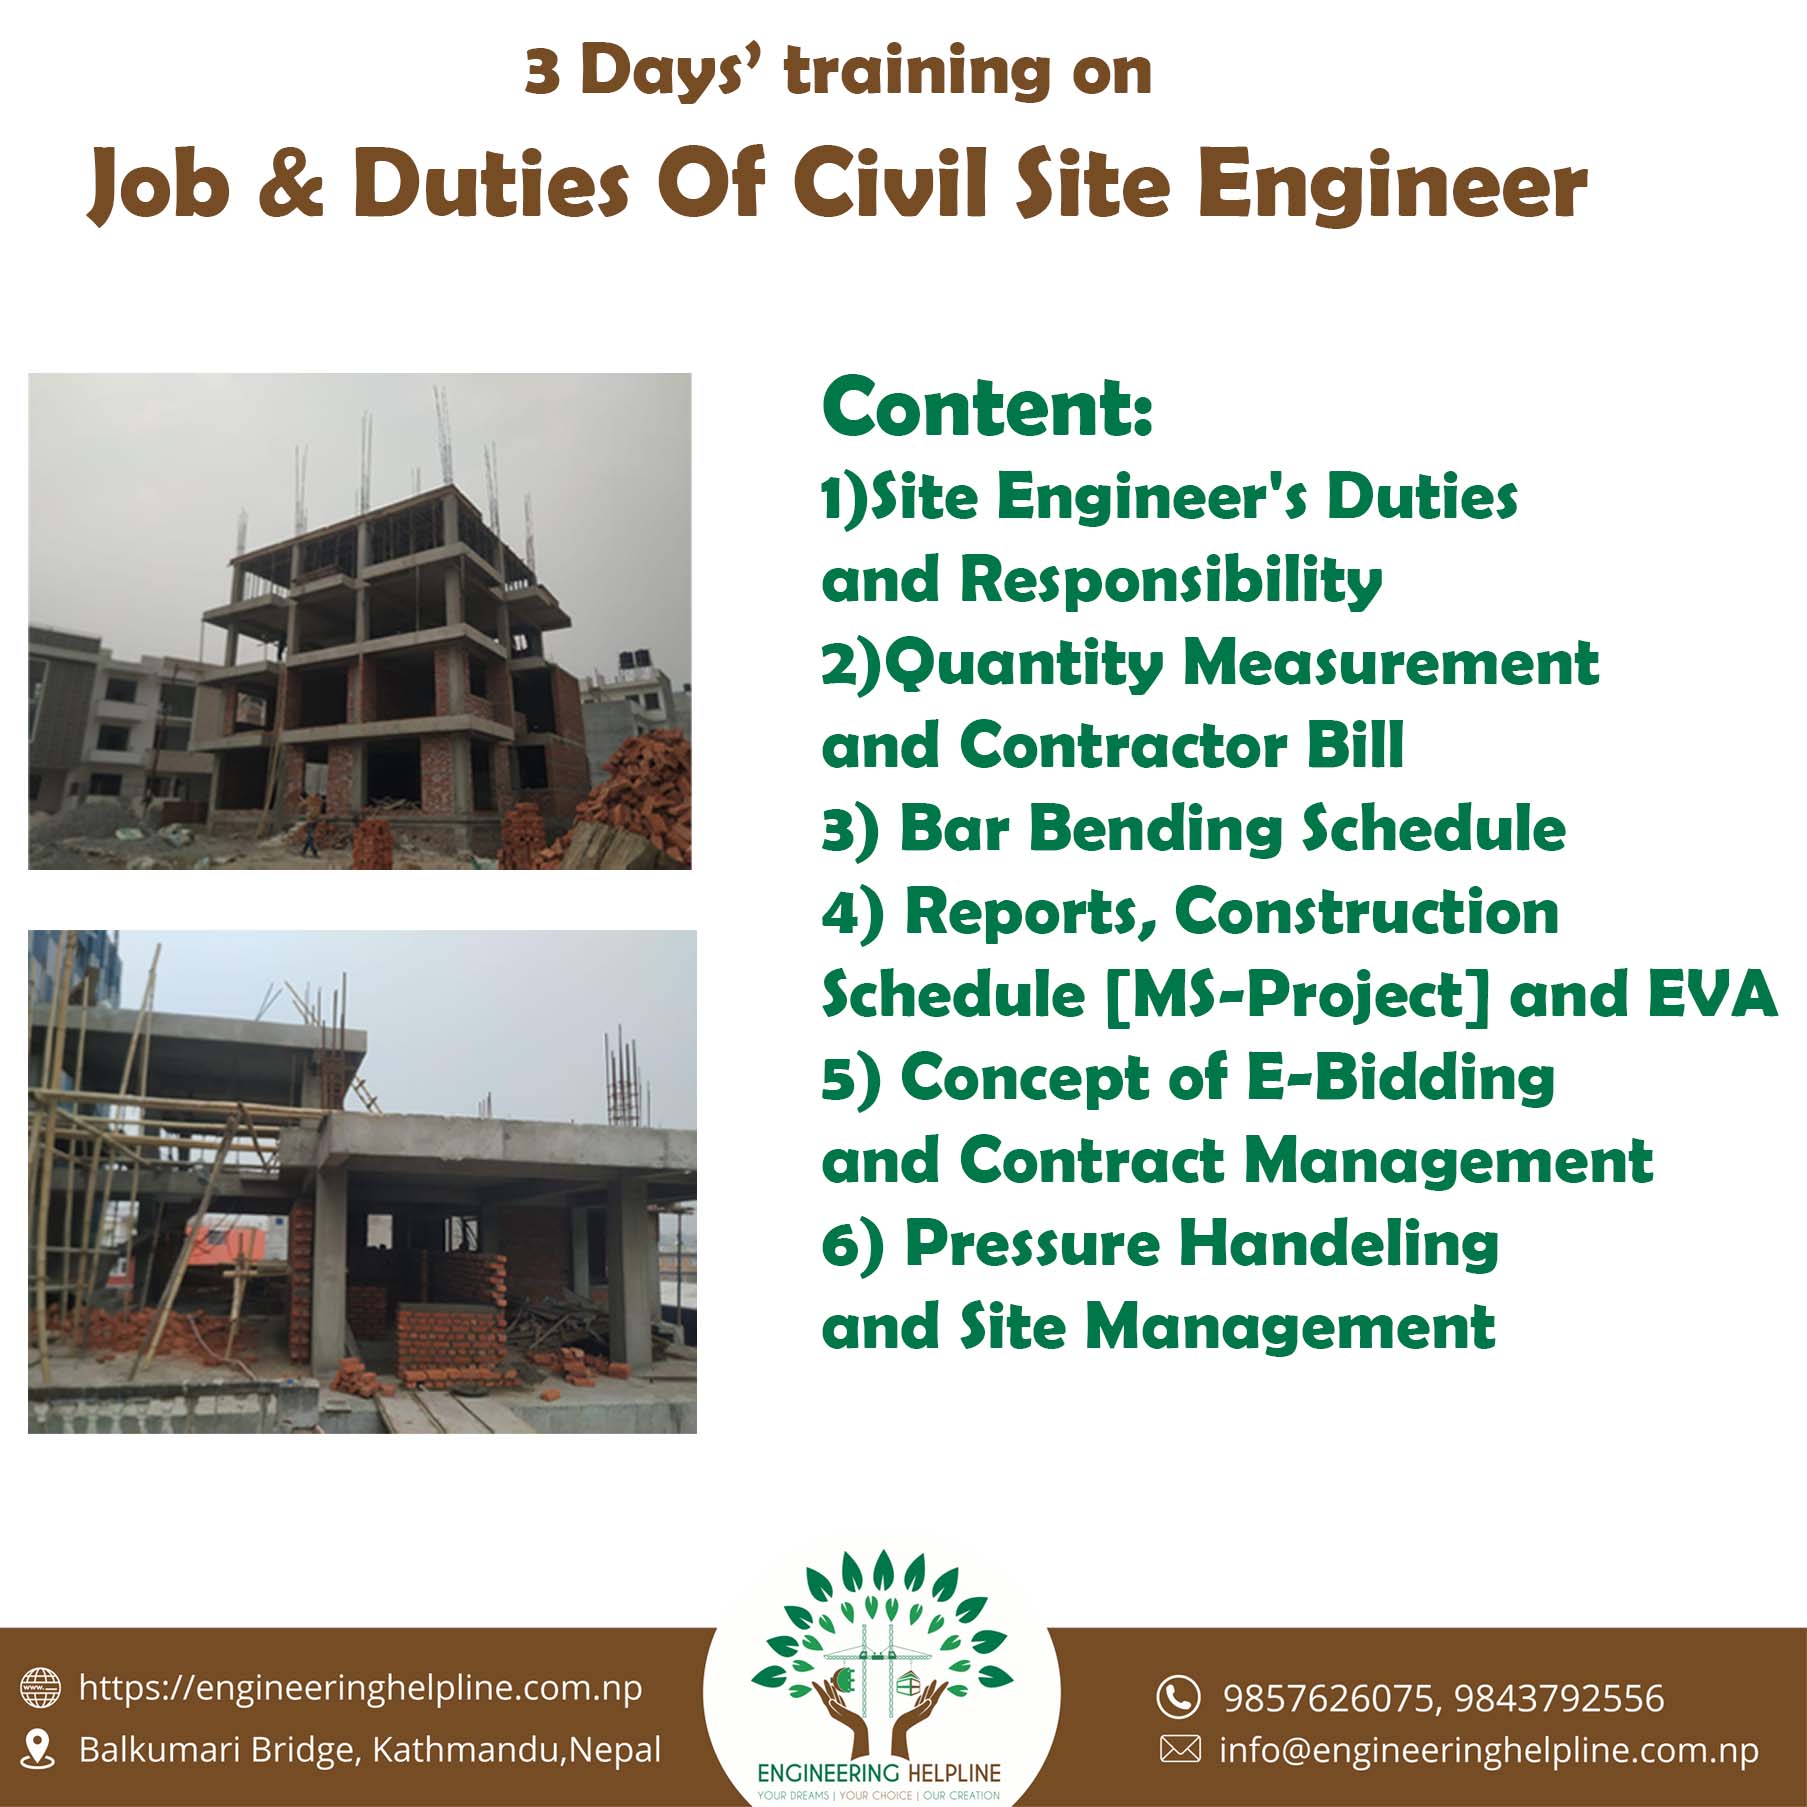 Job & Duties Of Civil Site Engineer